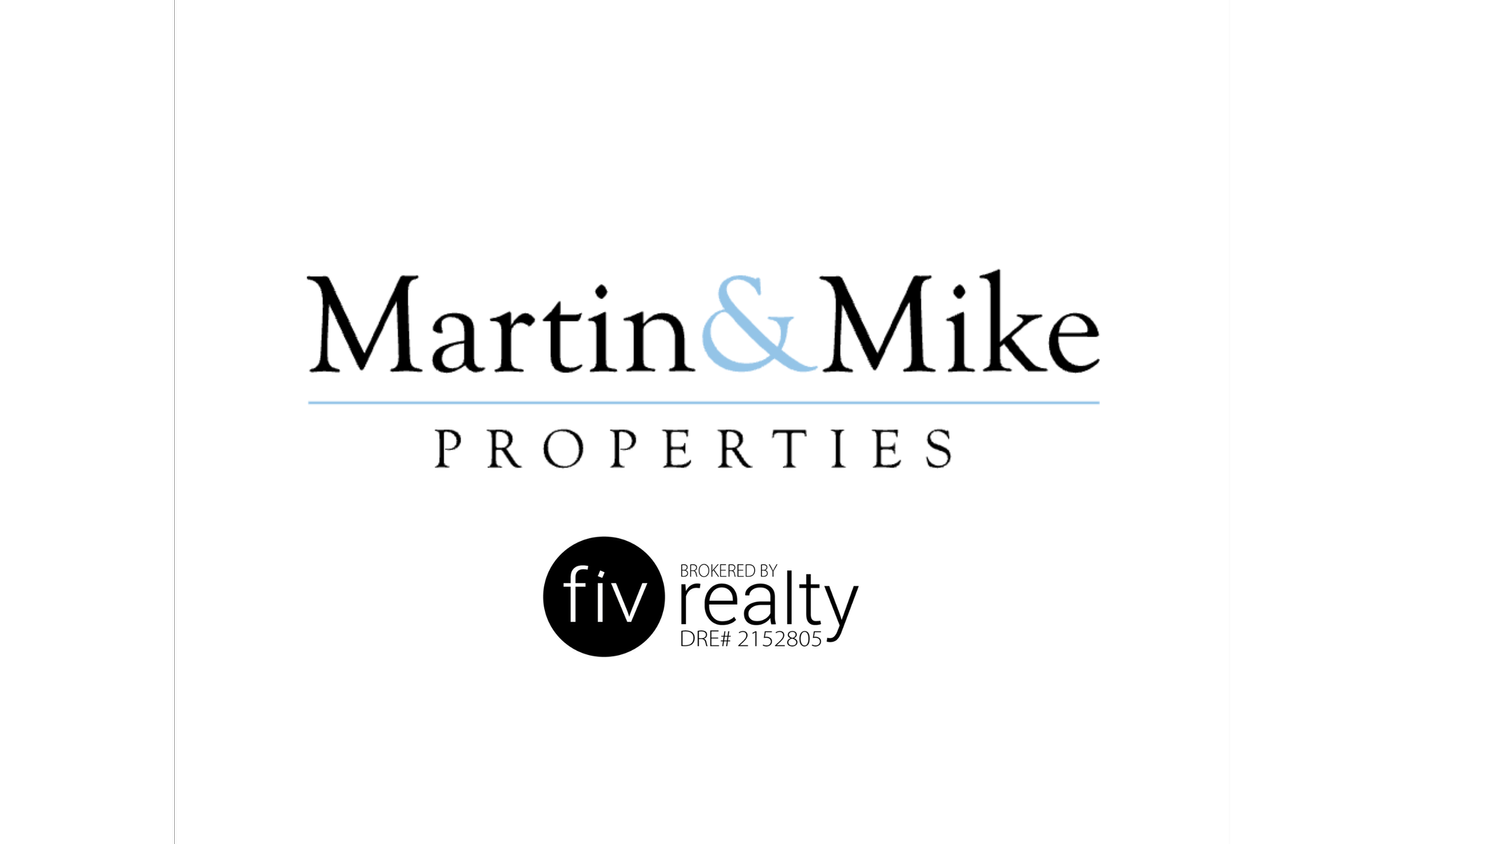 Martin & Mike Properties